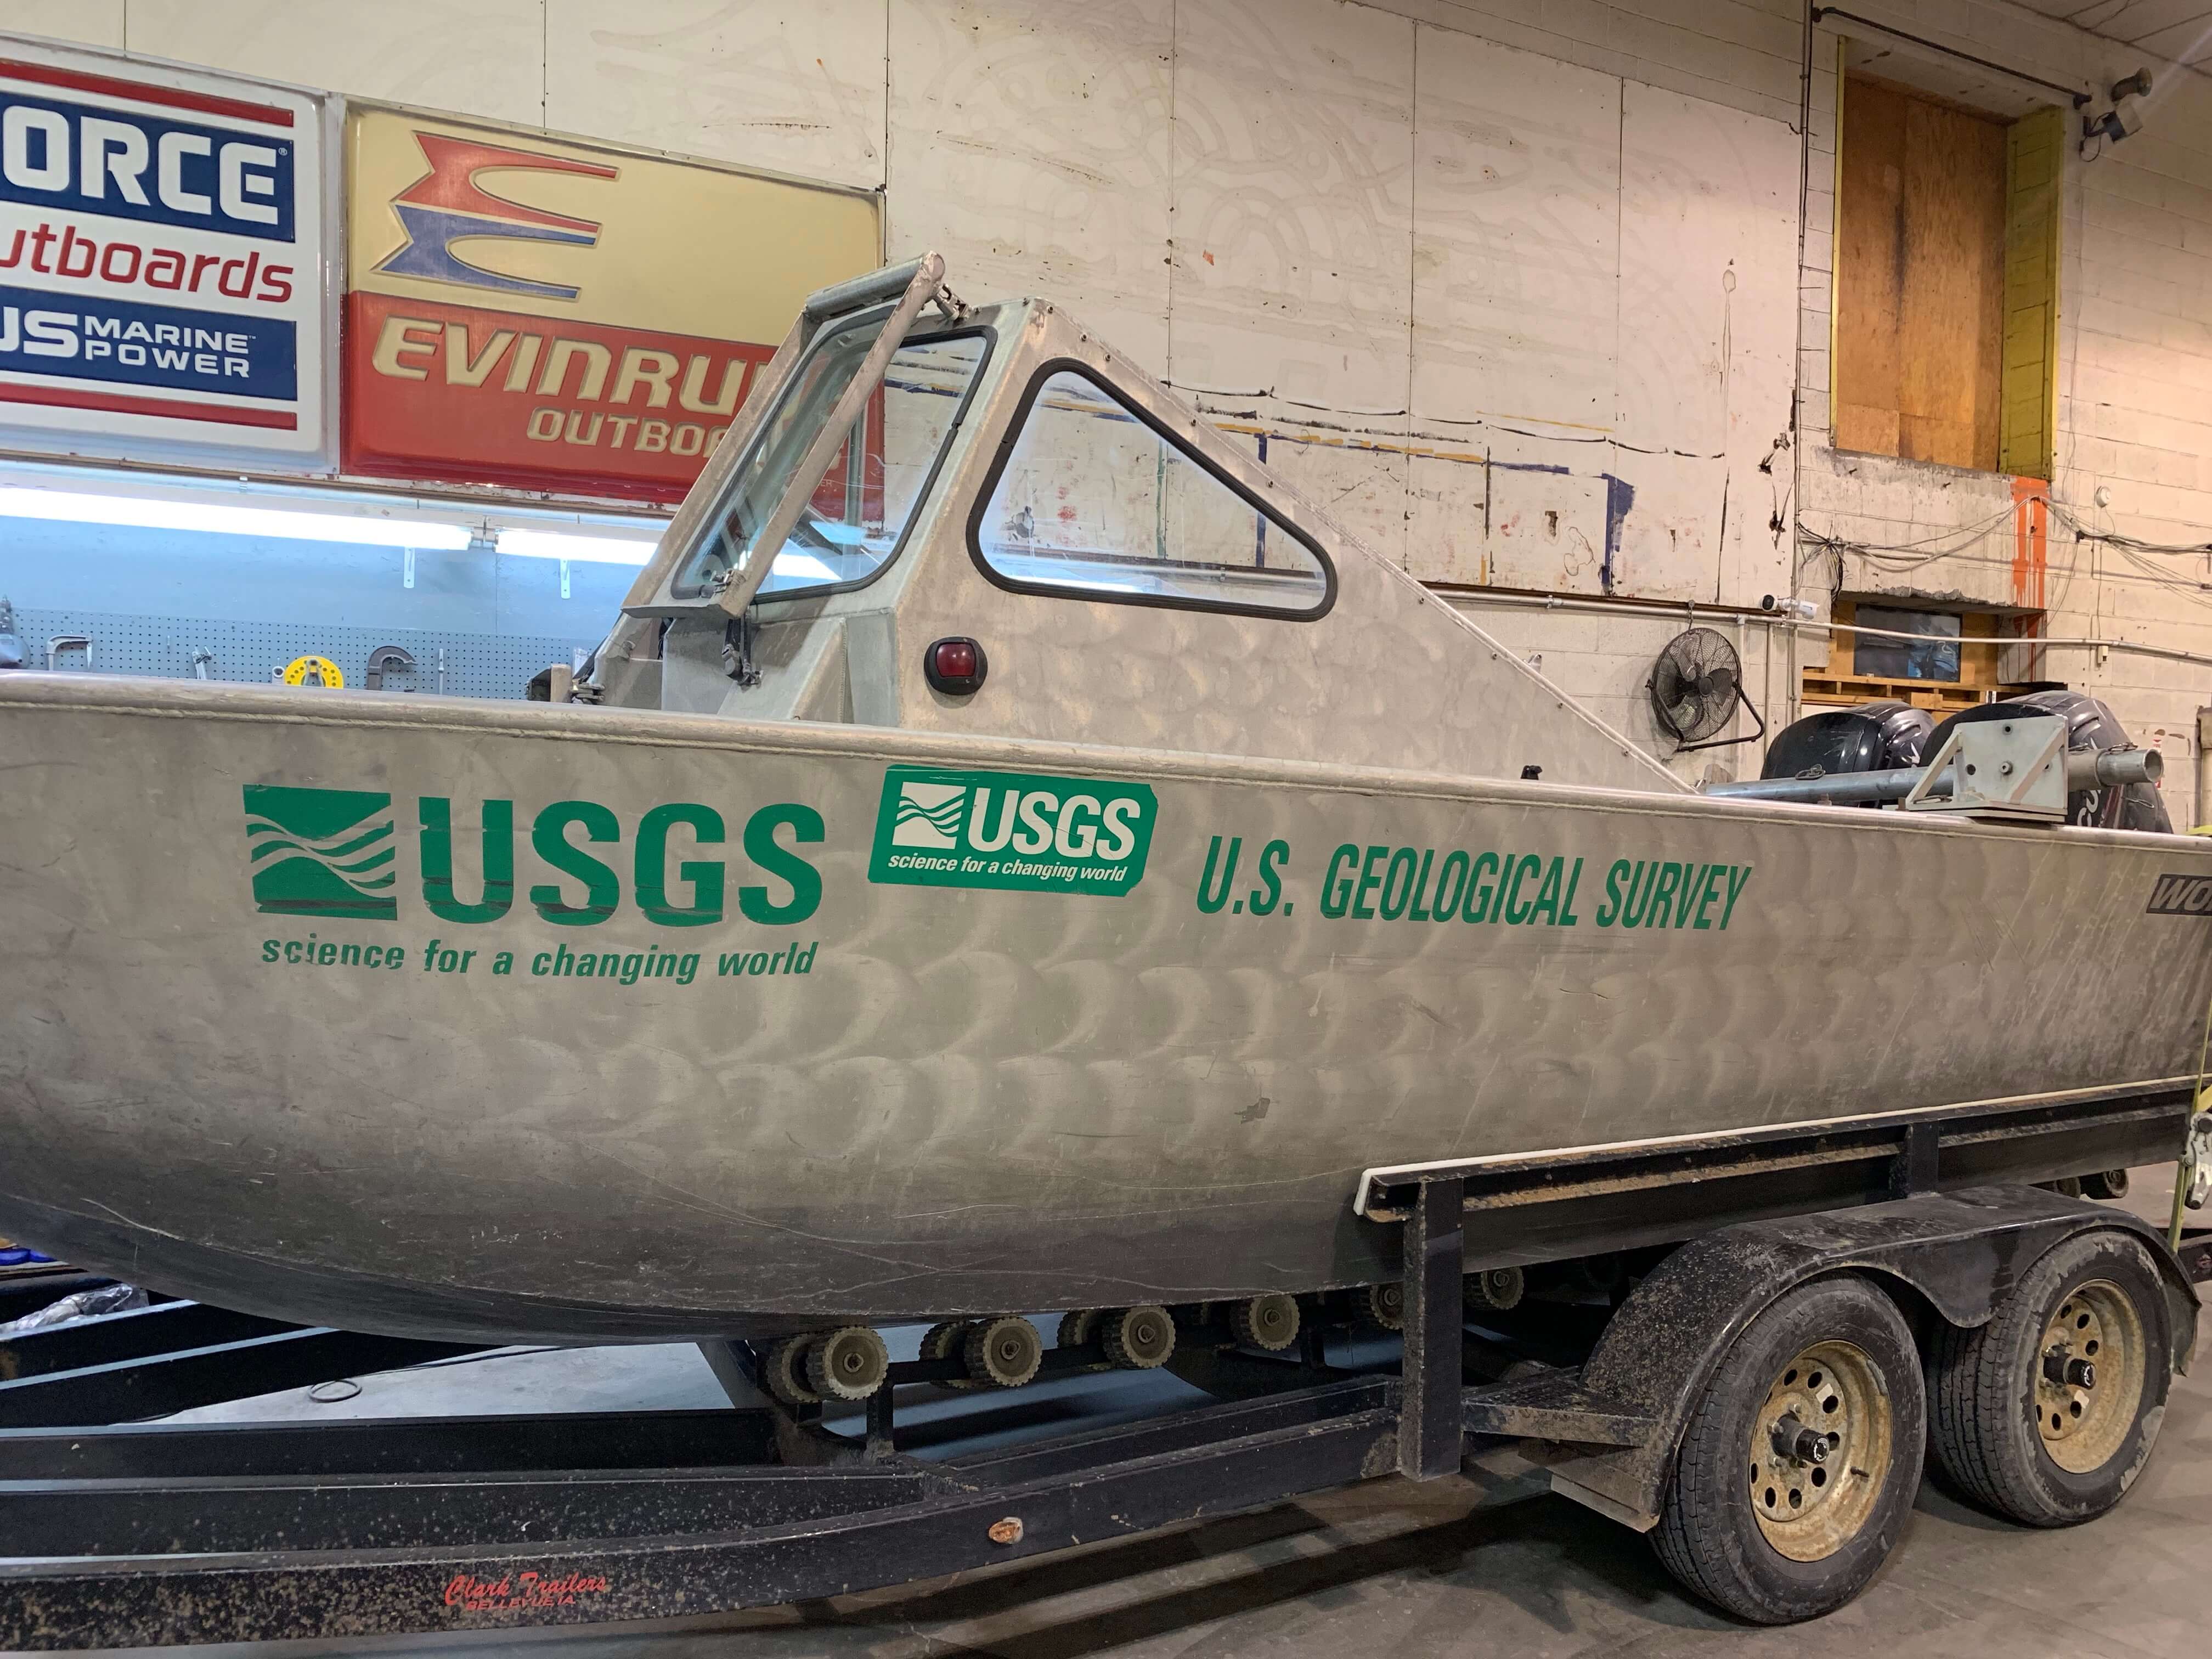 US Geological Survey Boat